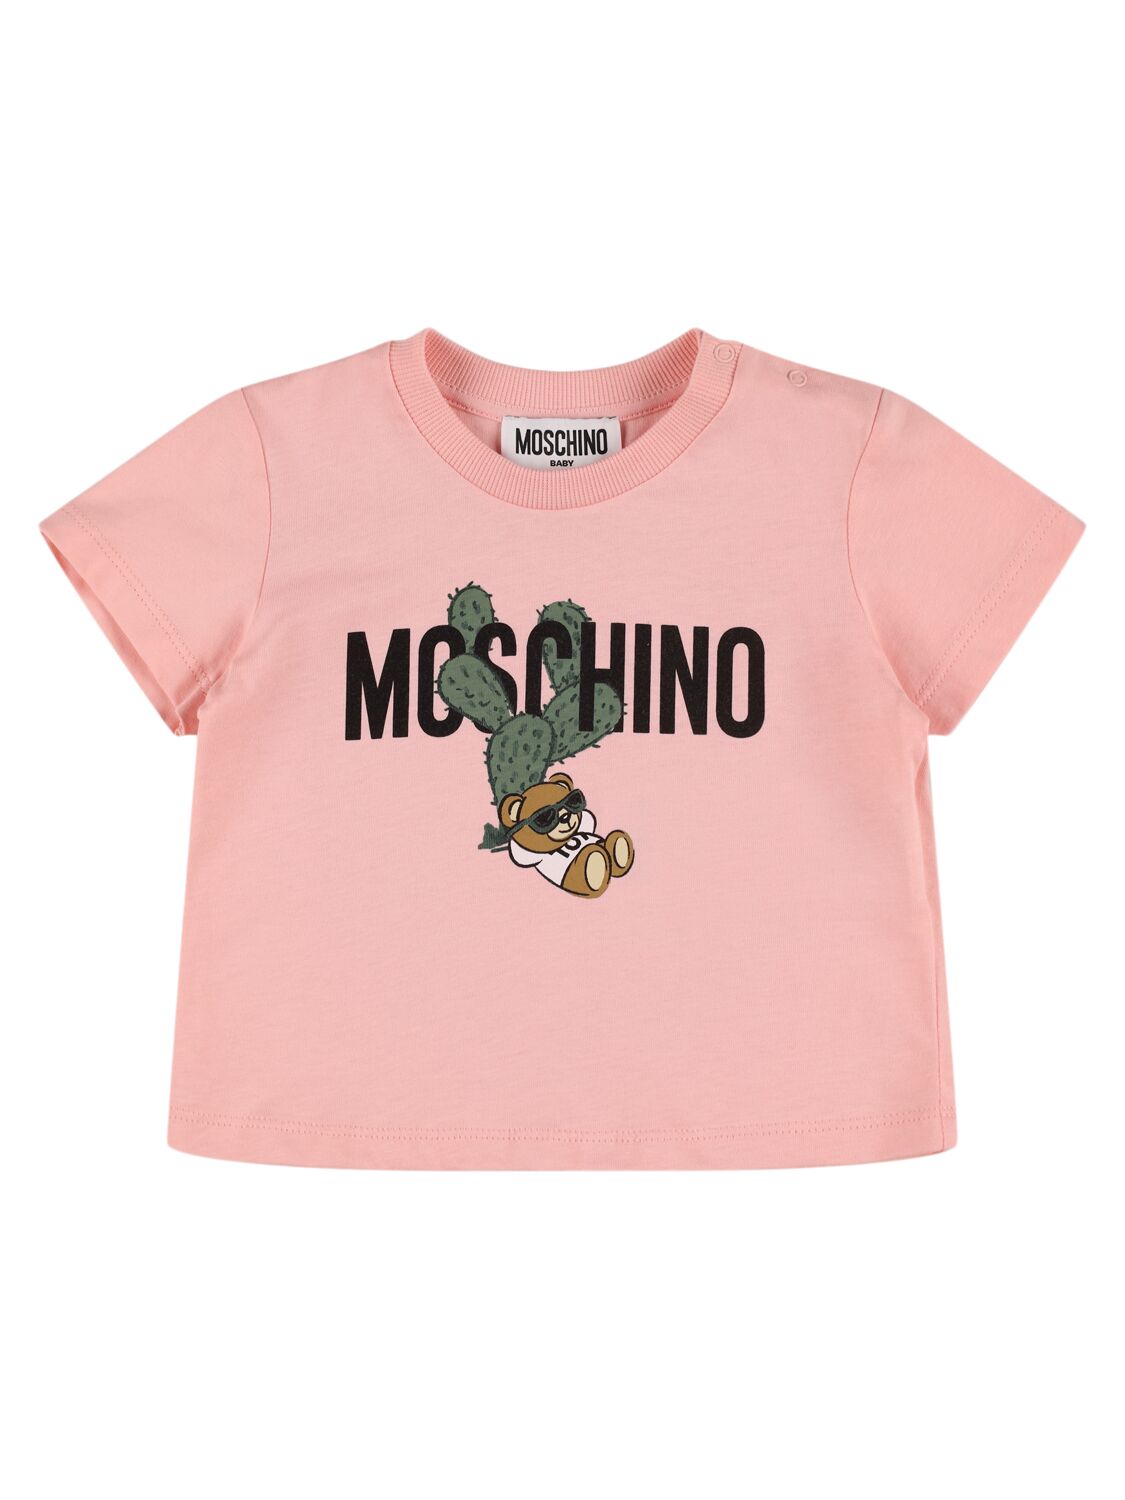 Moschino Kids' Cotton Jersey T-shirt In Pink